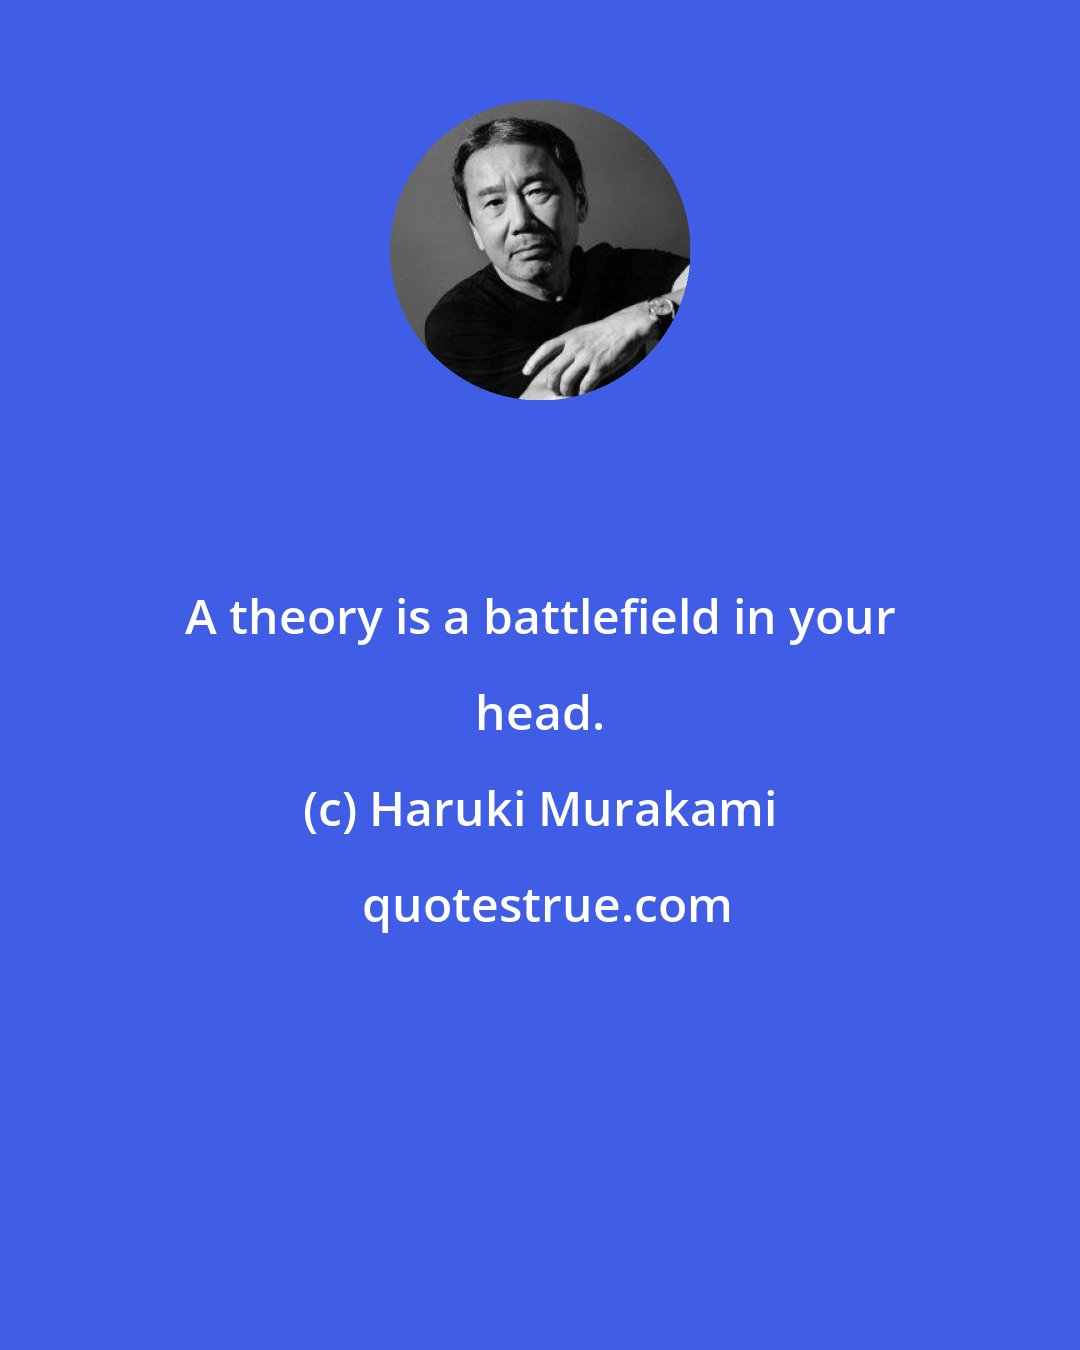 Haruki Murakami: A theory is a battlefield in your head.